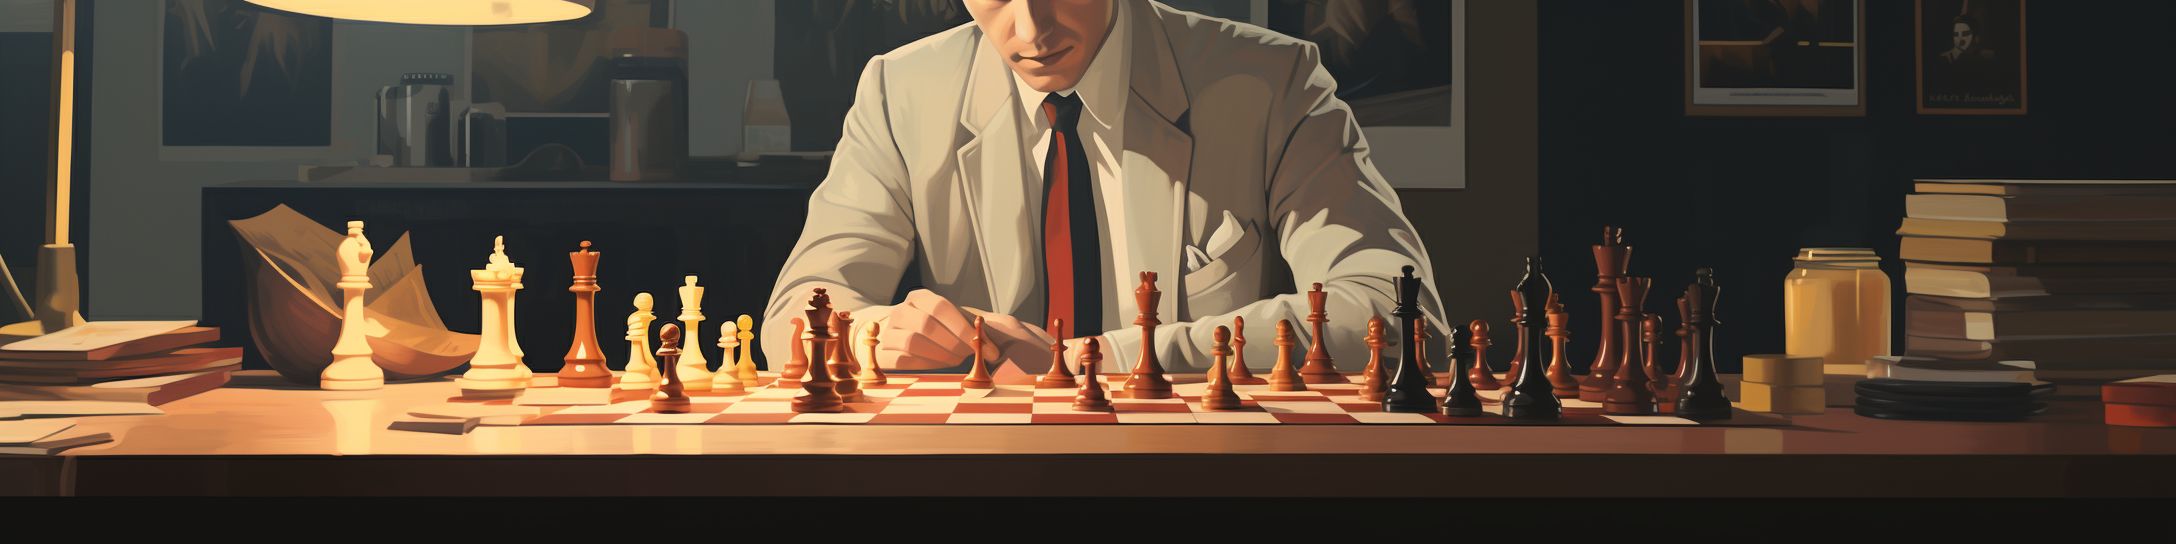 Les duels marquants de Fischer